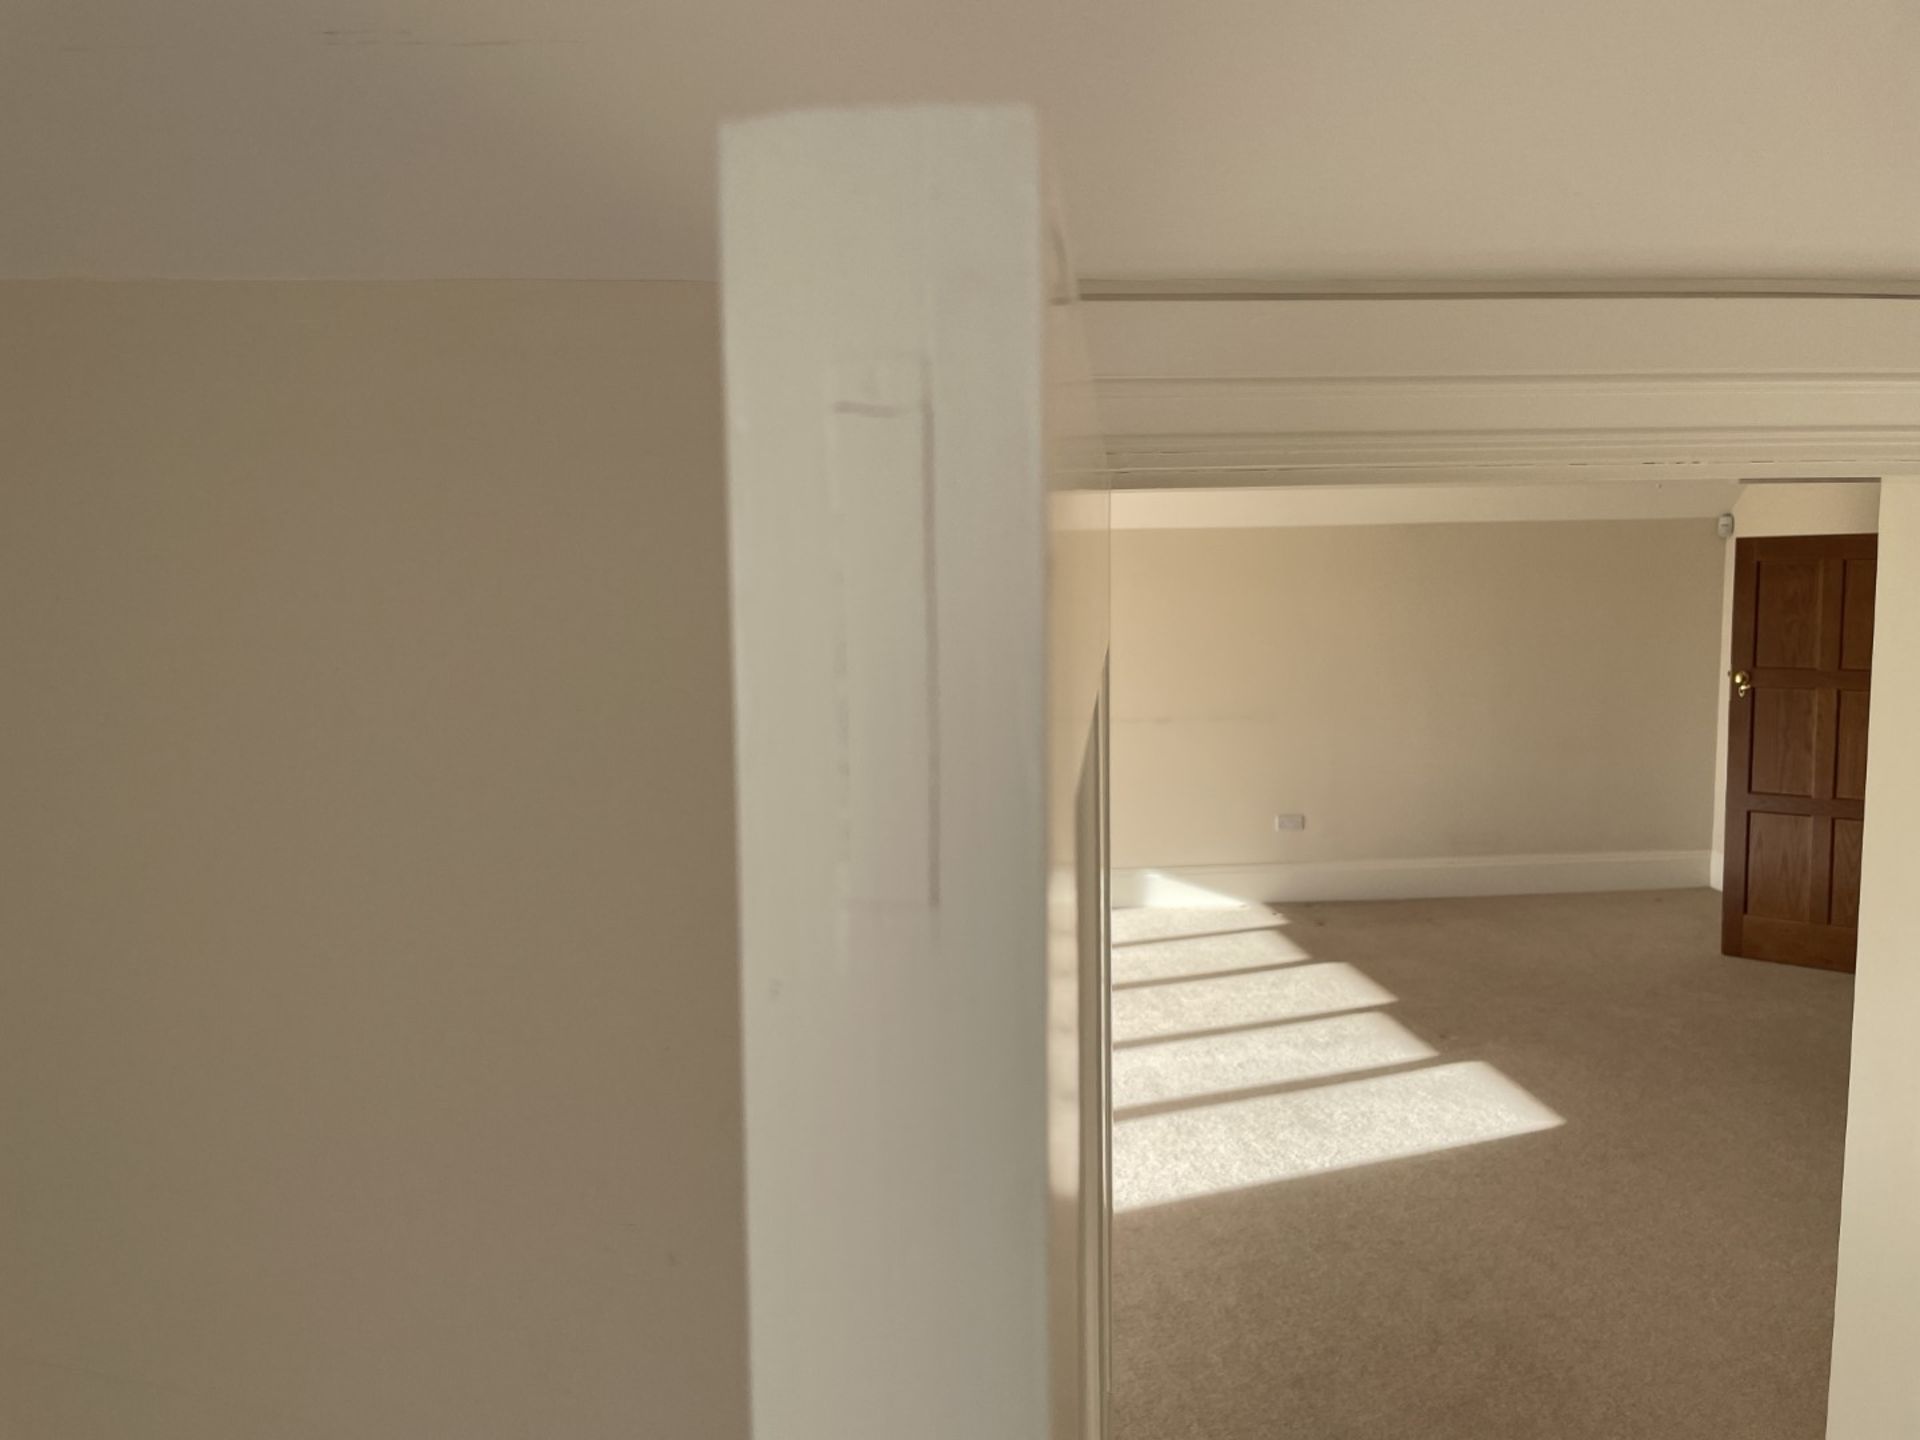 1 x Solid Wood Painted Internal Door, White - Image 4 of 11